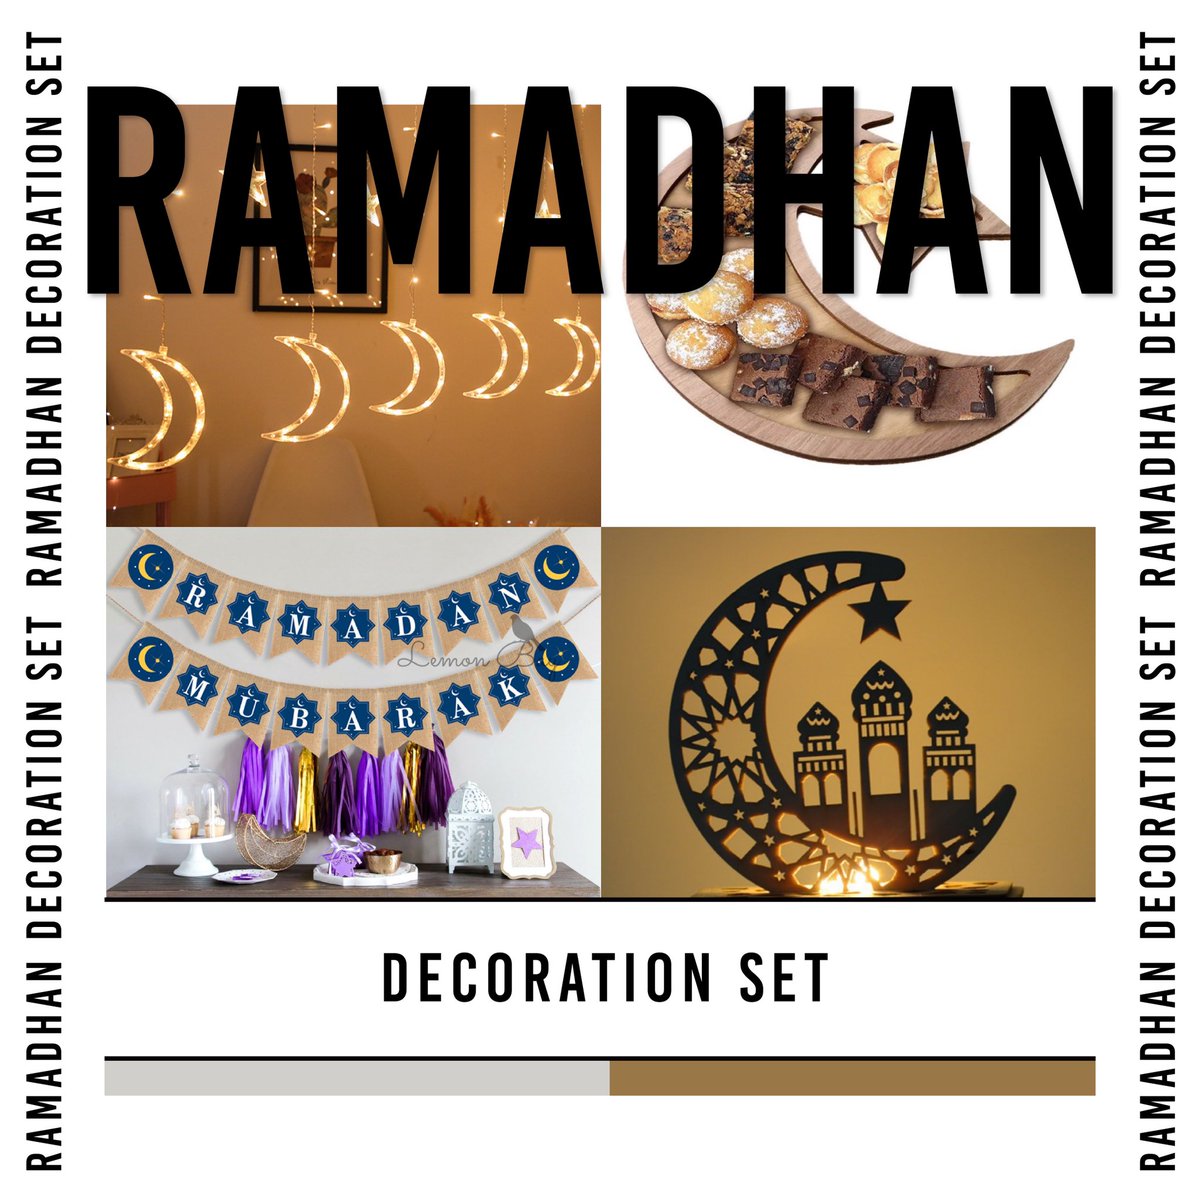 Our Ramadhan Decoration Set...

Weblink in bio ❤️❤️❤️

#bismillah #startup #inshallah #inshaallah #alhamdulillah #womeninbusiness #womenpreneur #mumpreneur  #ramadan #ramadhan #ramadandecorations #ramadandecor #ramadhandecorations #ramadanbanner #iftar #iftartray #ramadanlights